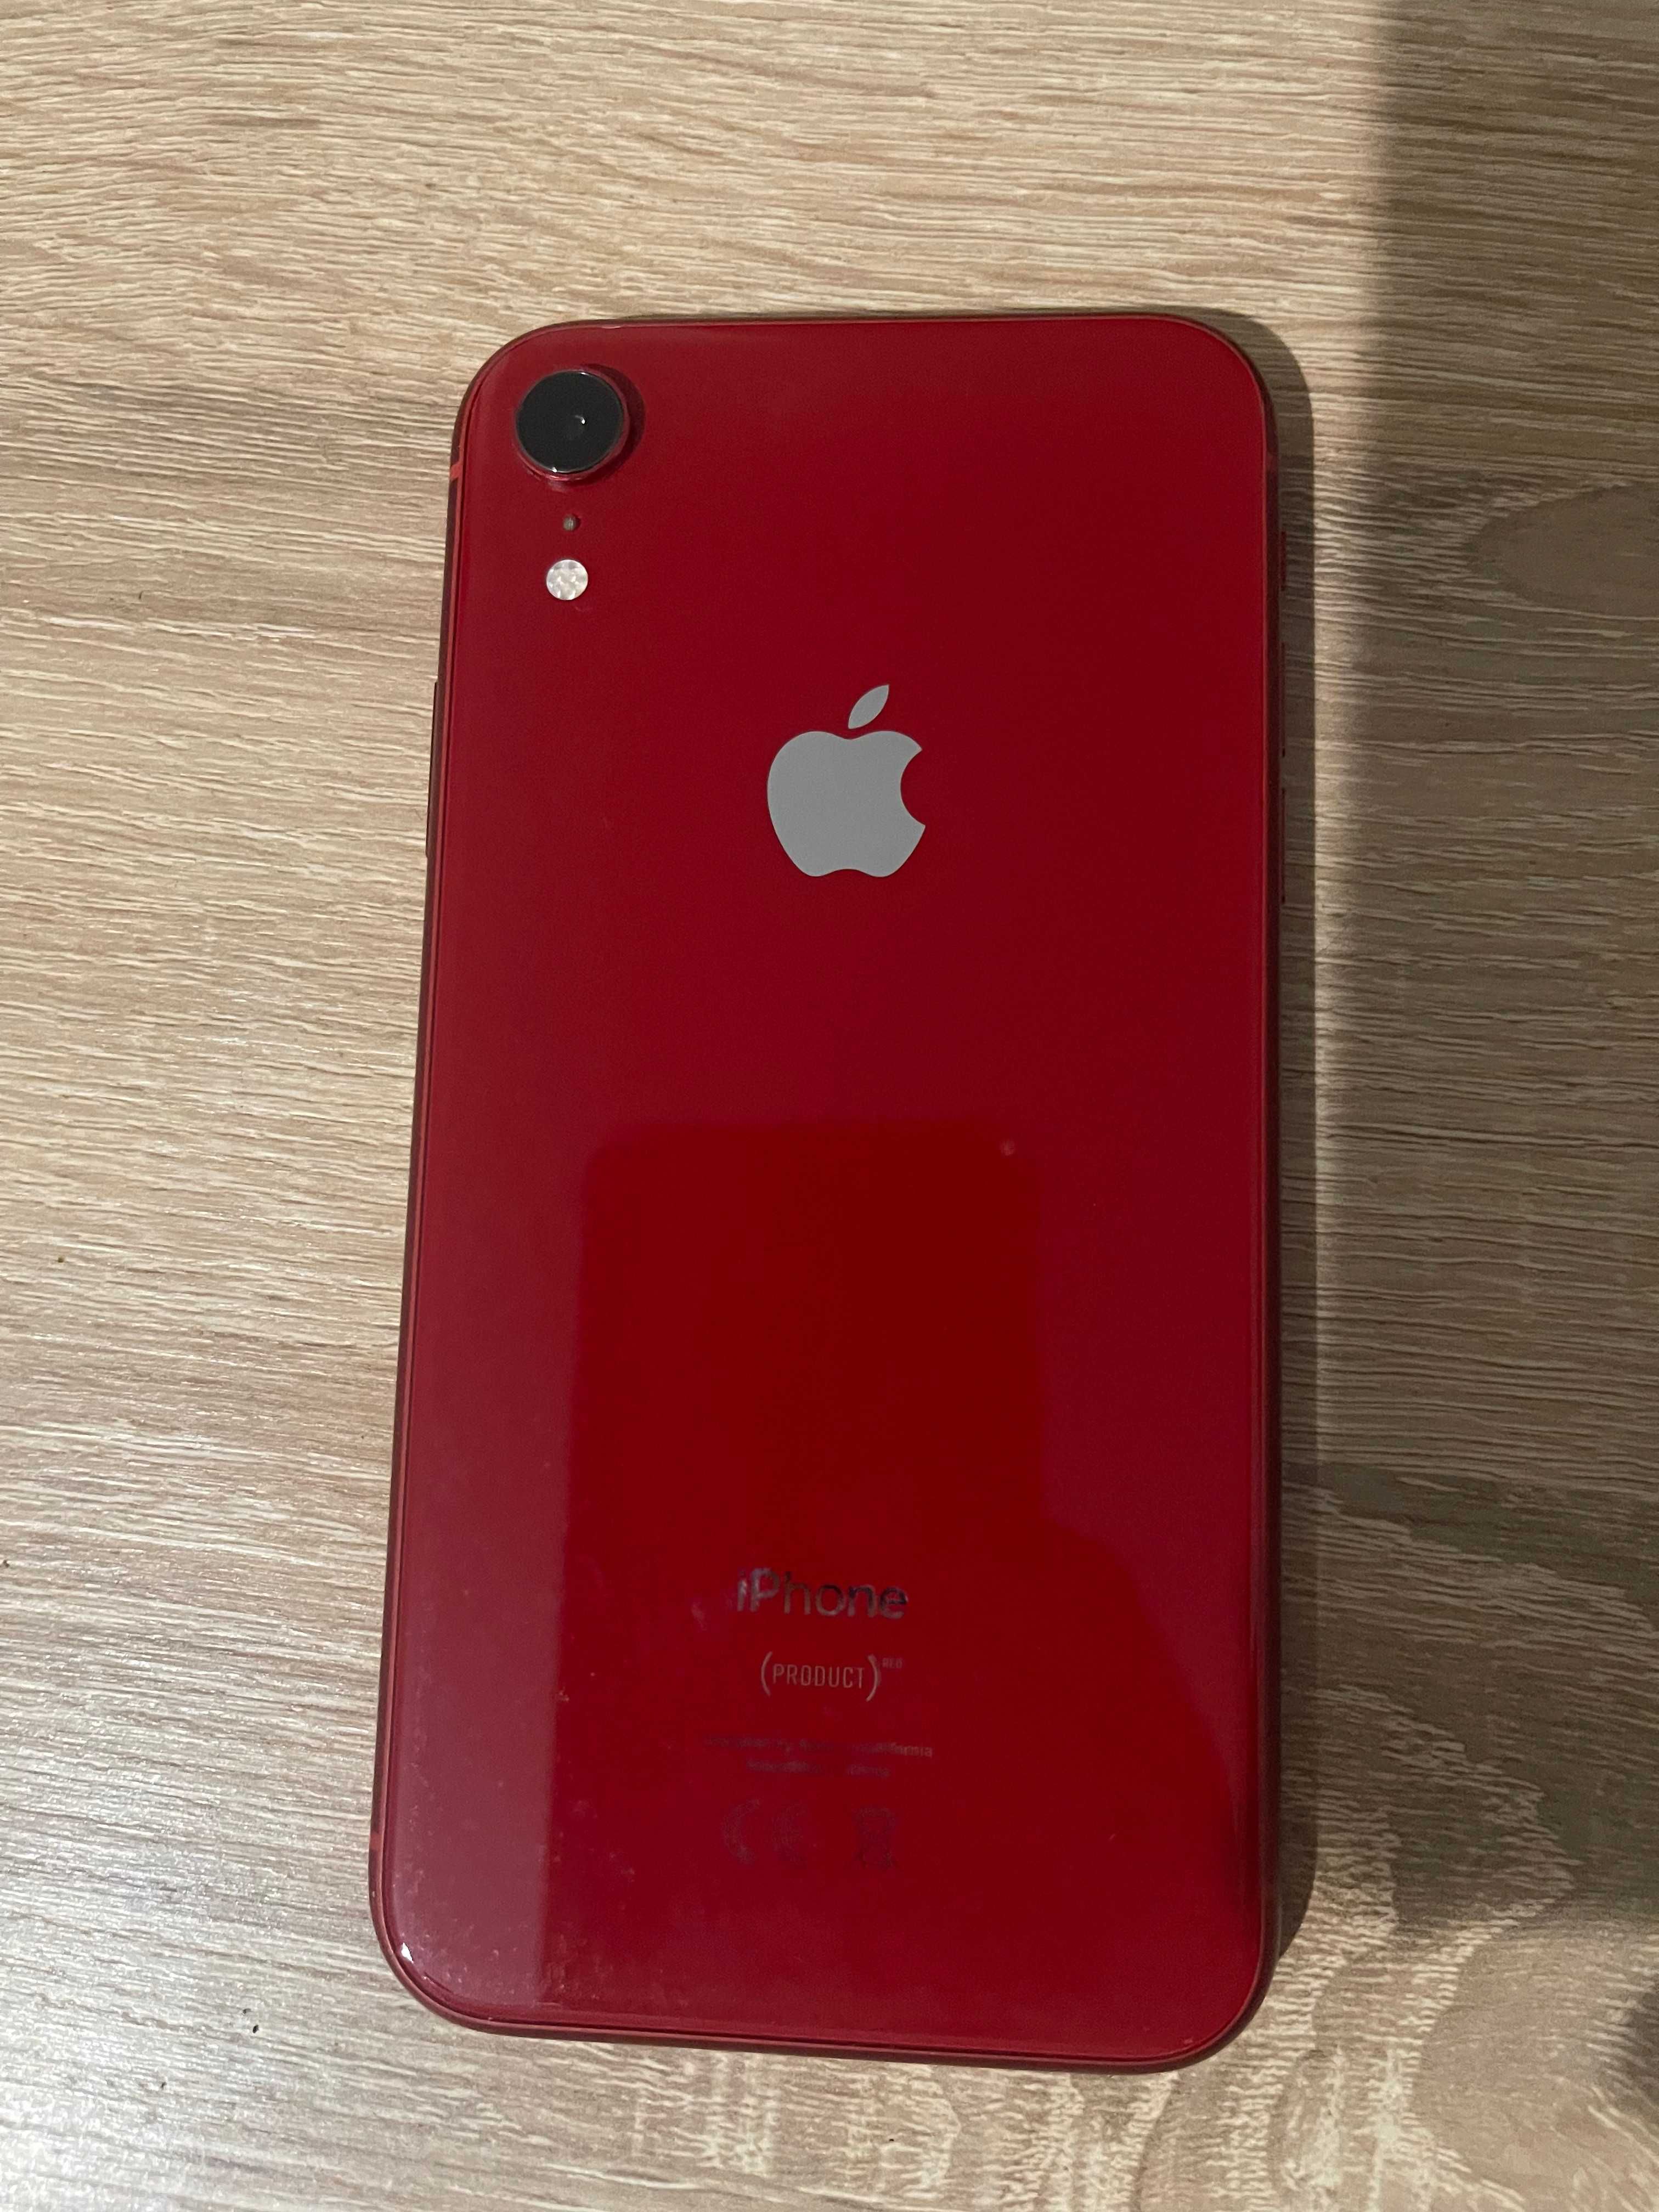 iPhone 10 XR 64GB Red почти новый пользовались 2 месяца